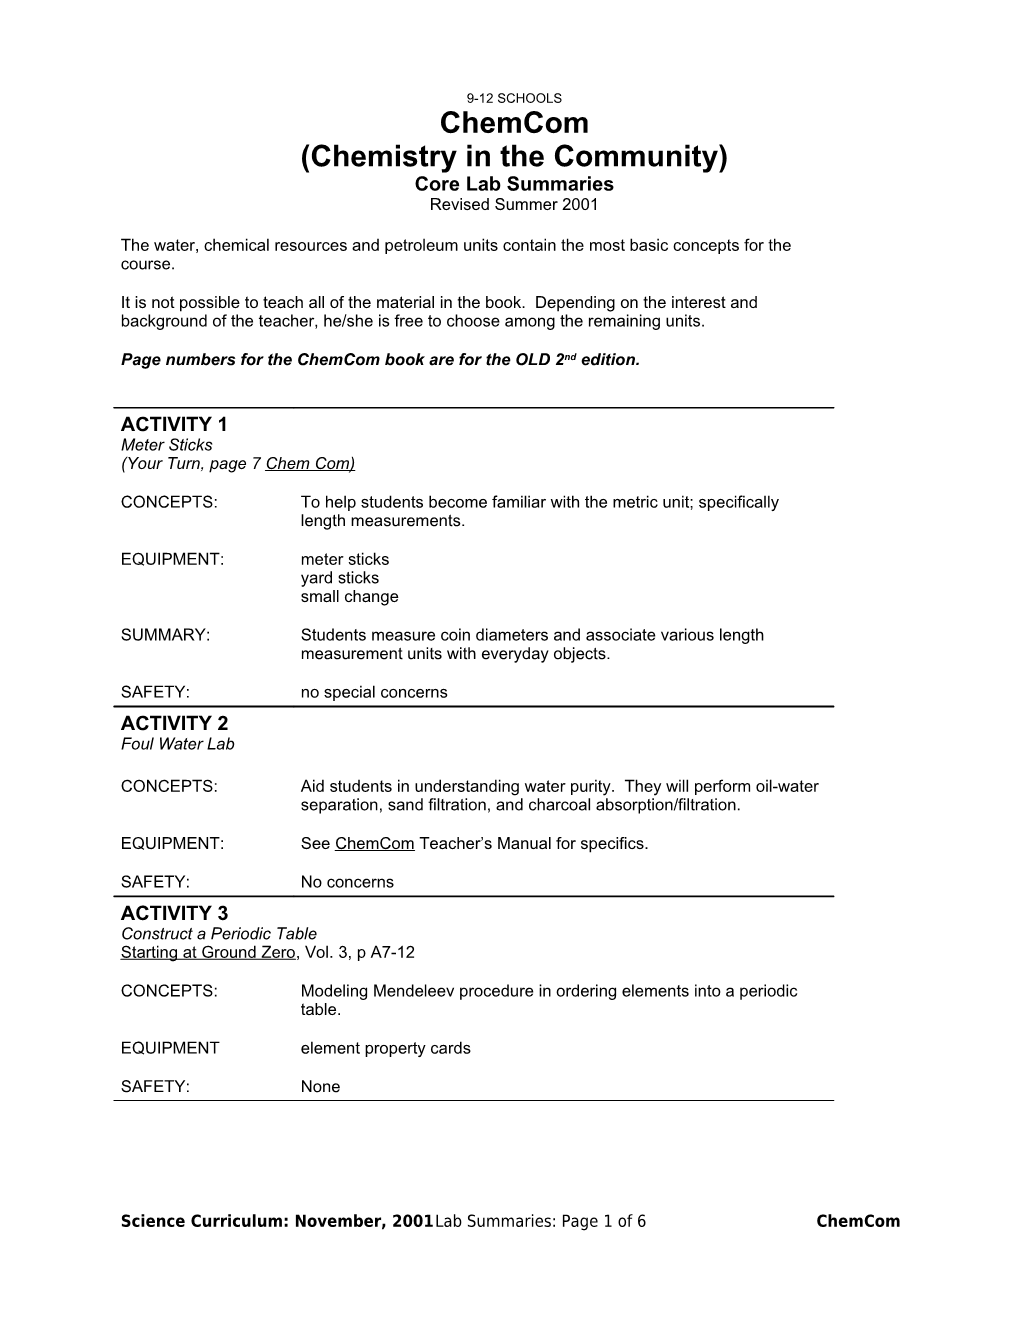 Chemcom Core Lab Summaries